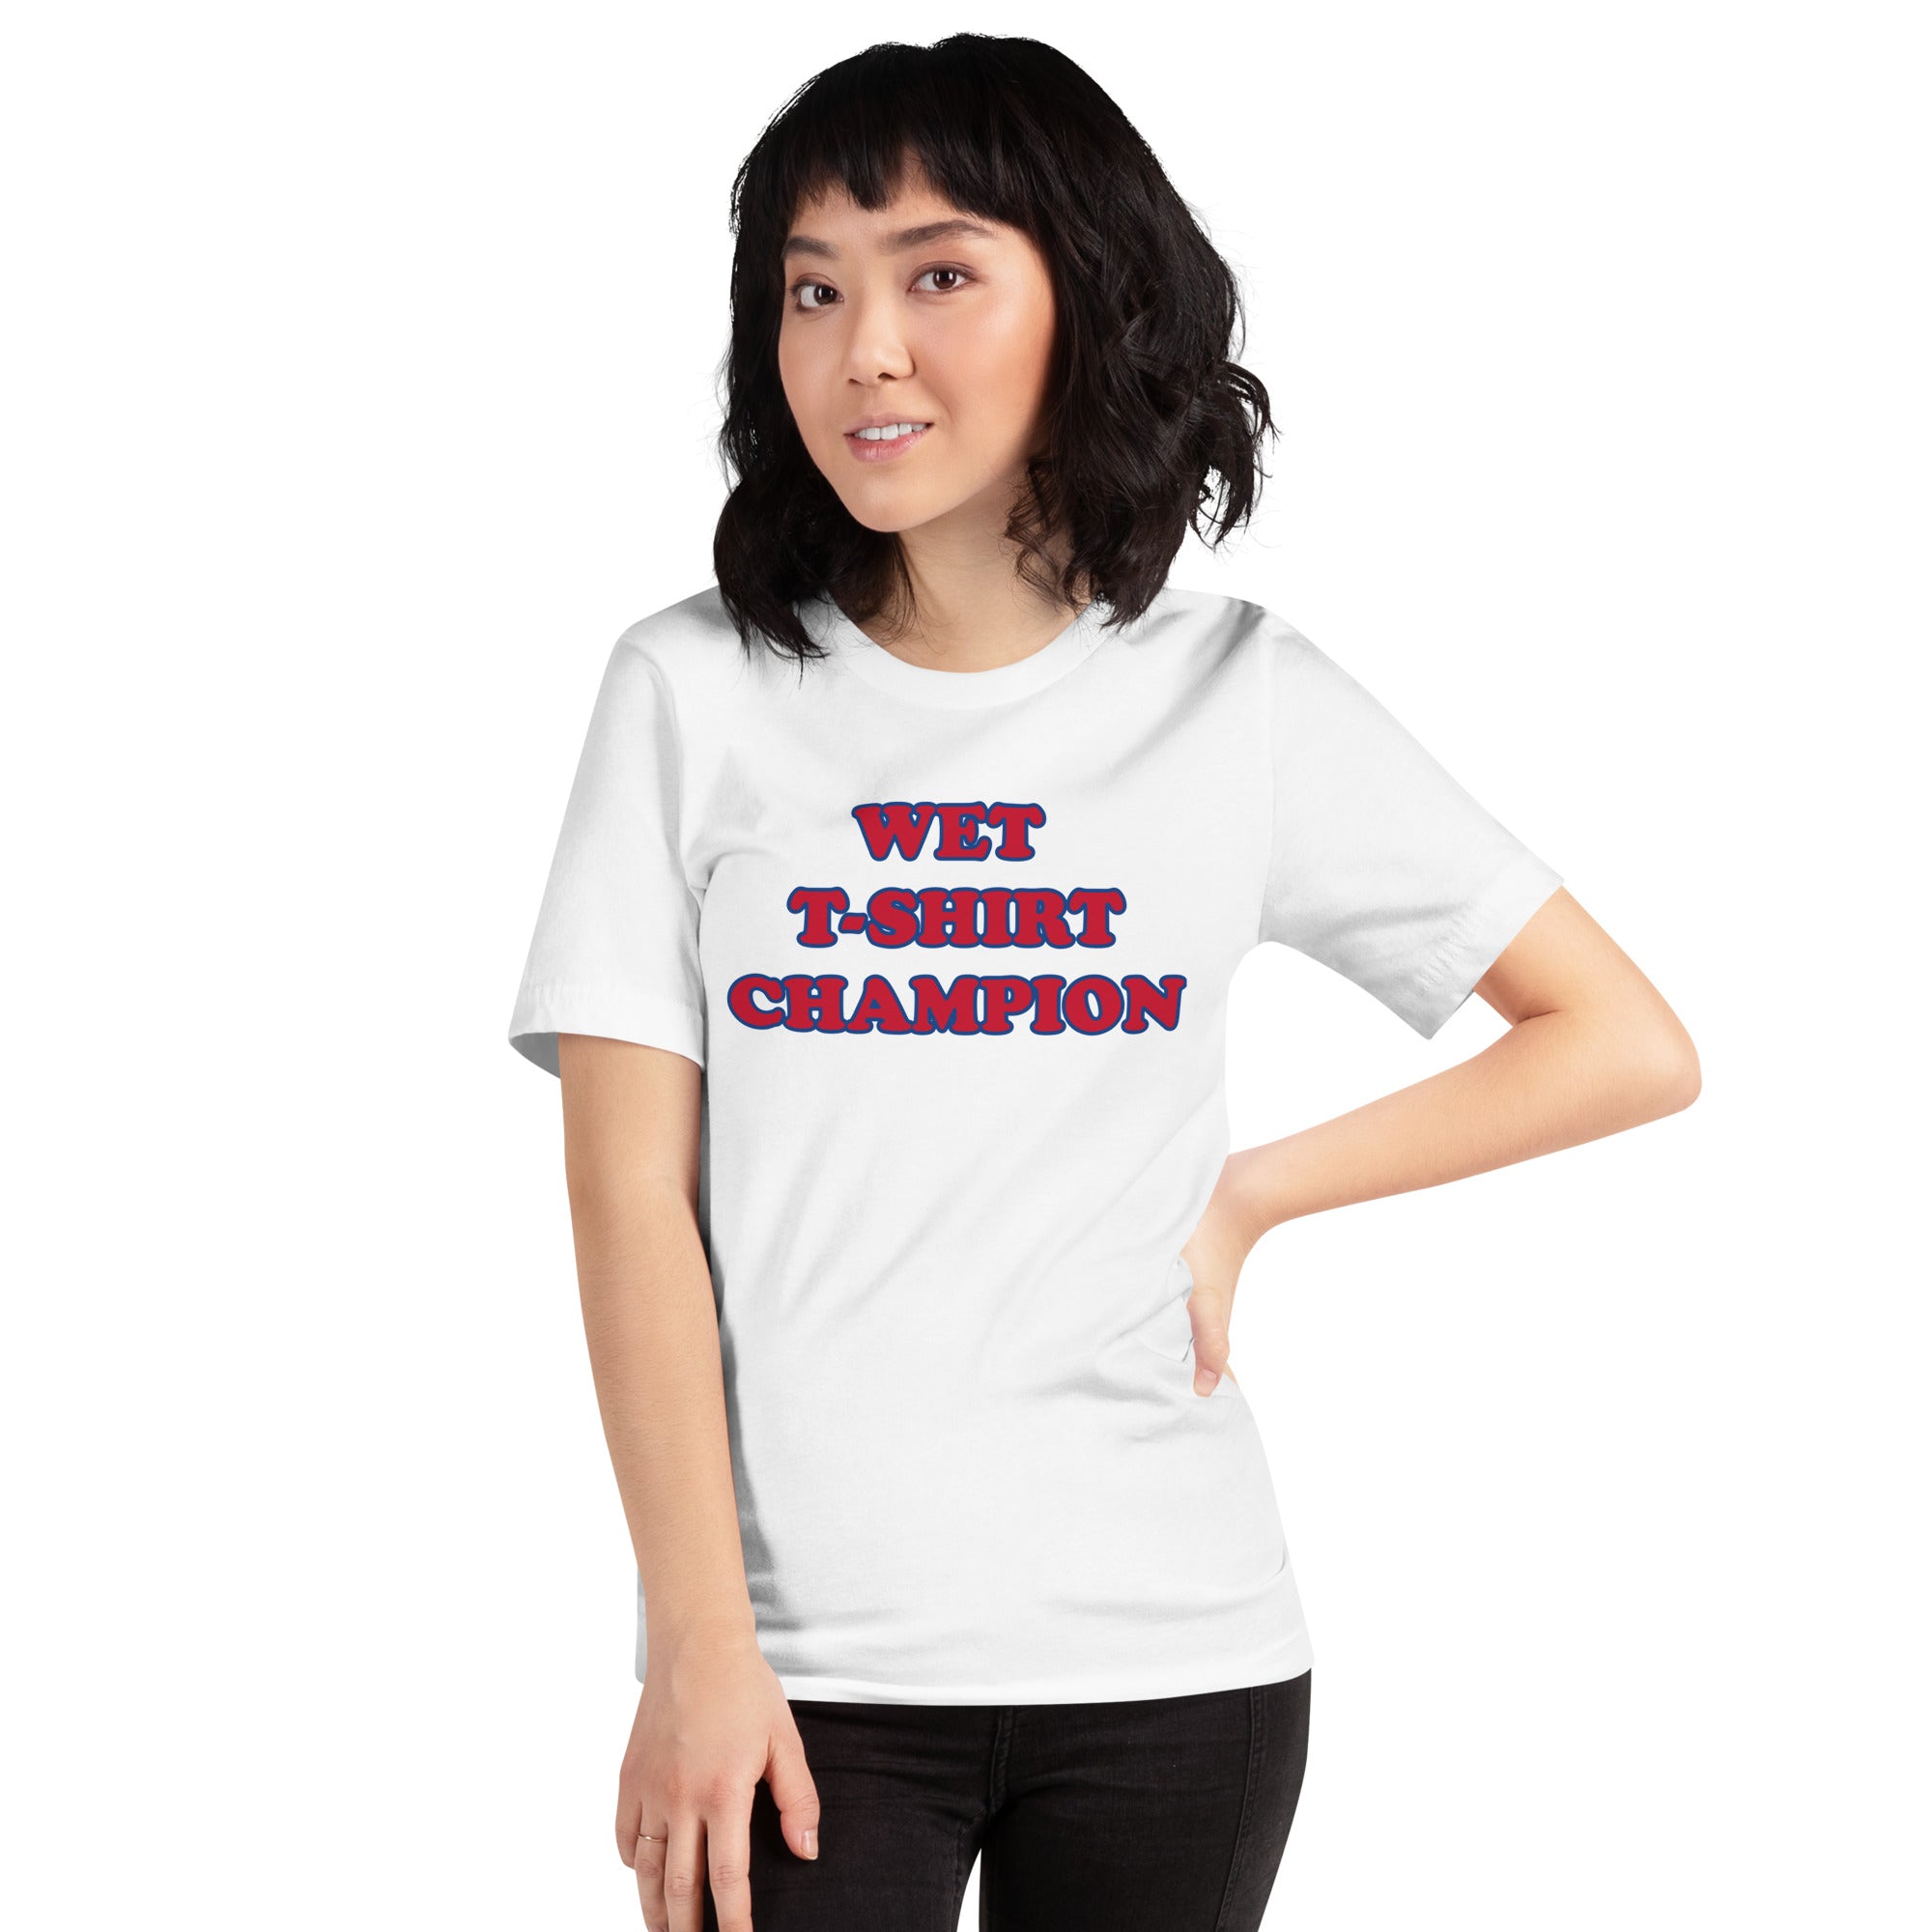 Occlusie Absoluut Zich voorstellen Wet T-Shirt Champion T-Shirt – Five Finger Discount